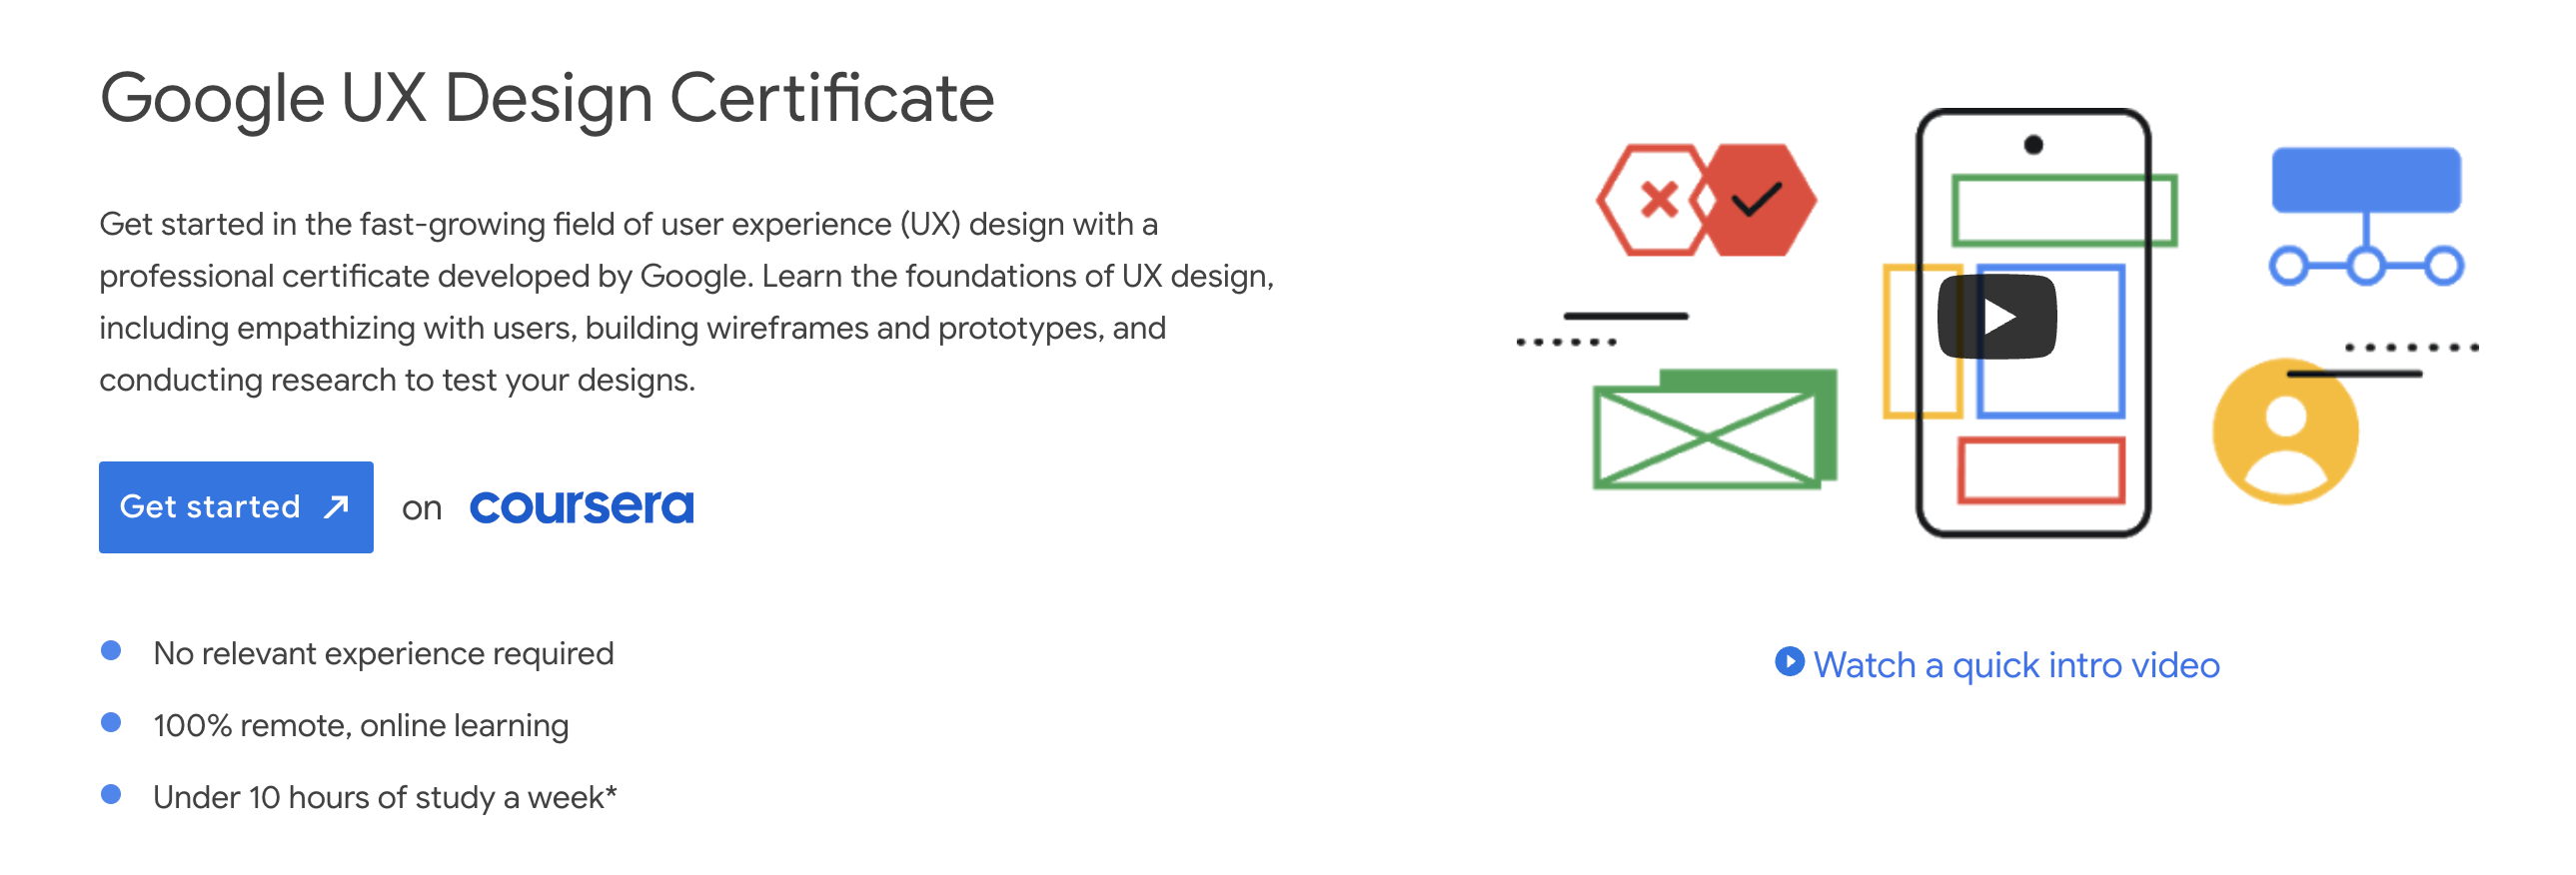 Google UX design certificate landing page